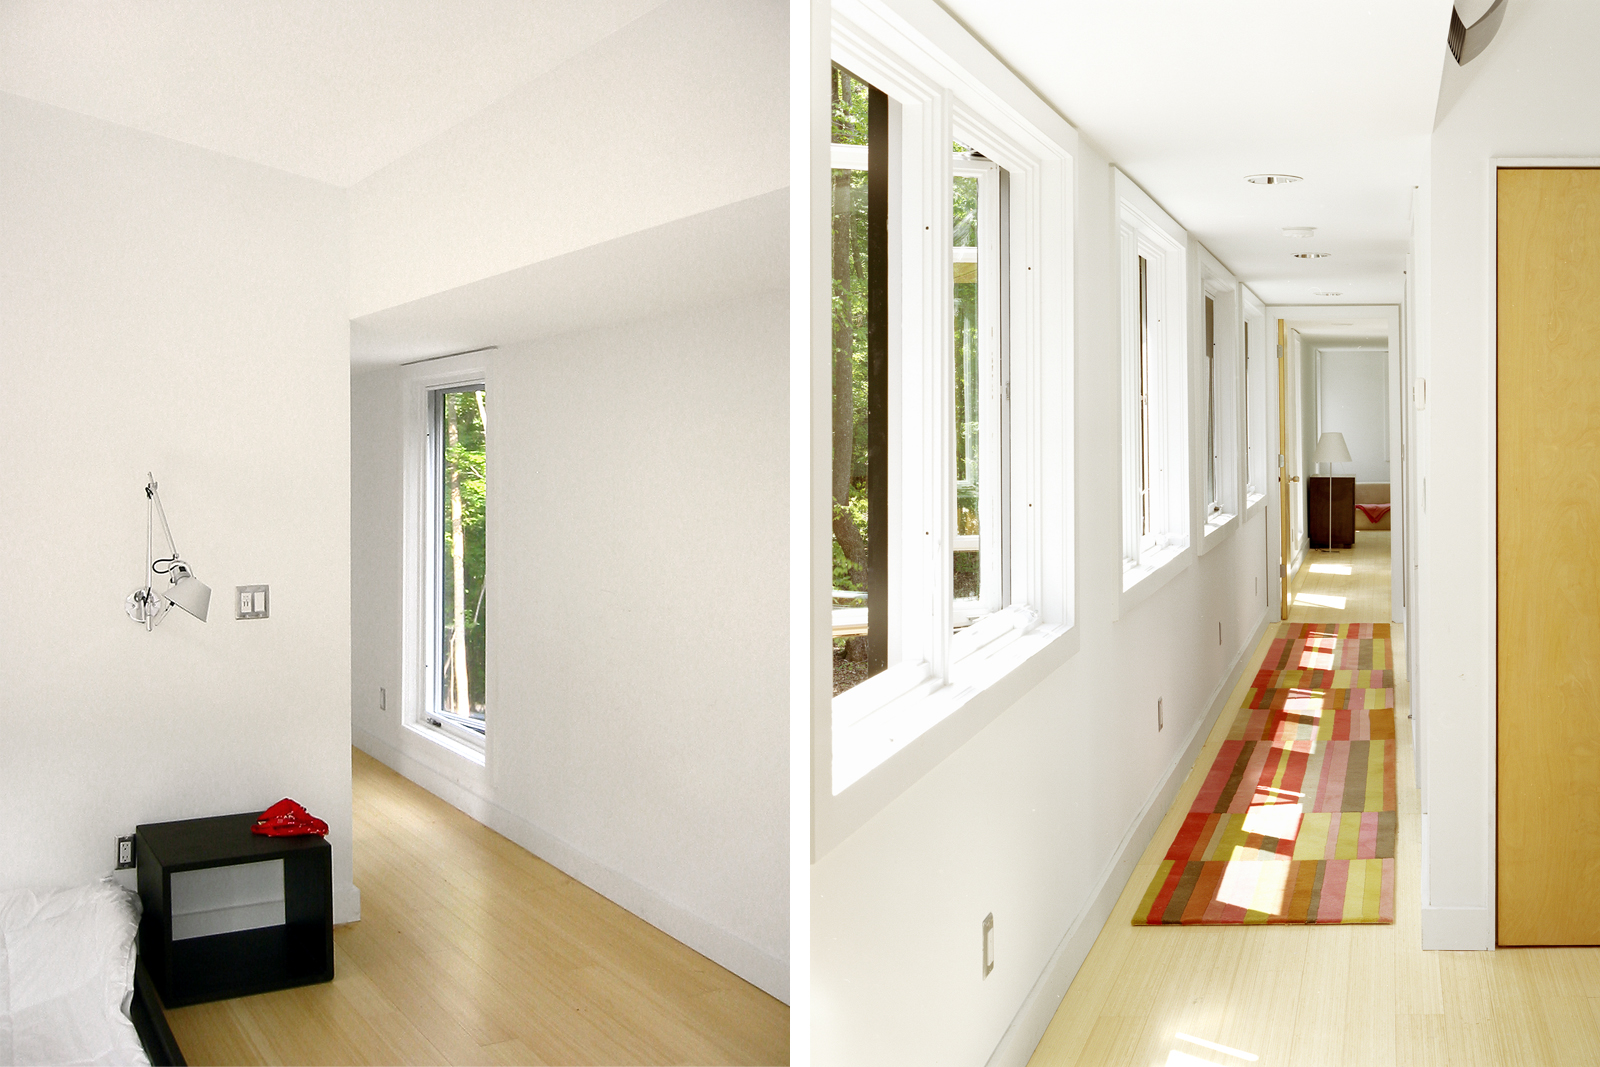 14-res4-resolution-4-architecture-modern-modular-house-prefab-dwell-home-interior-bedroom-hall.jpg